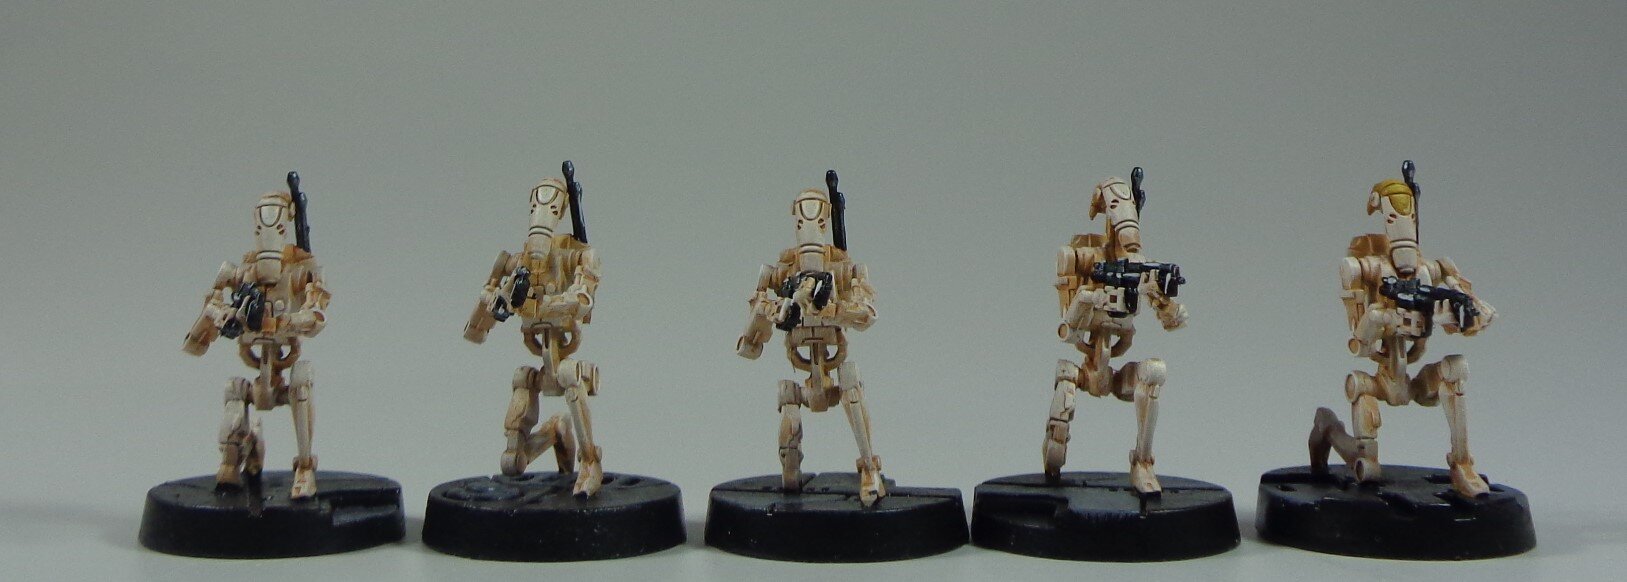 Star Wars Legion Miniature Painting Sevice Droidekas B-1 Droids Dooku Grevious (9).JPG